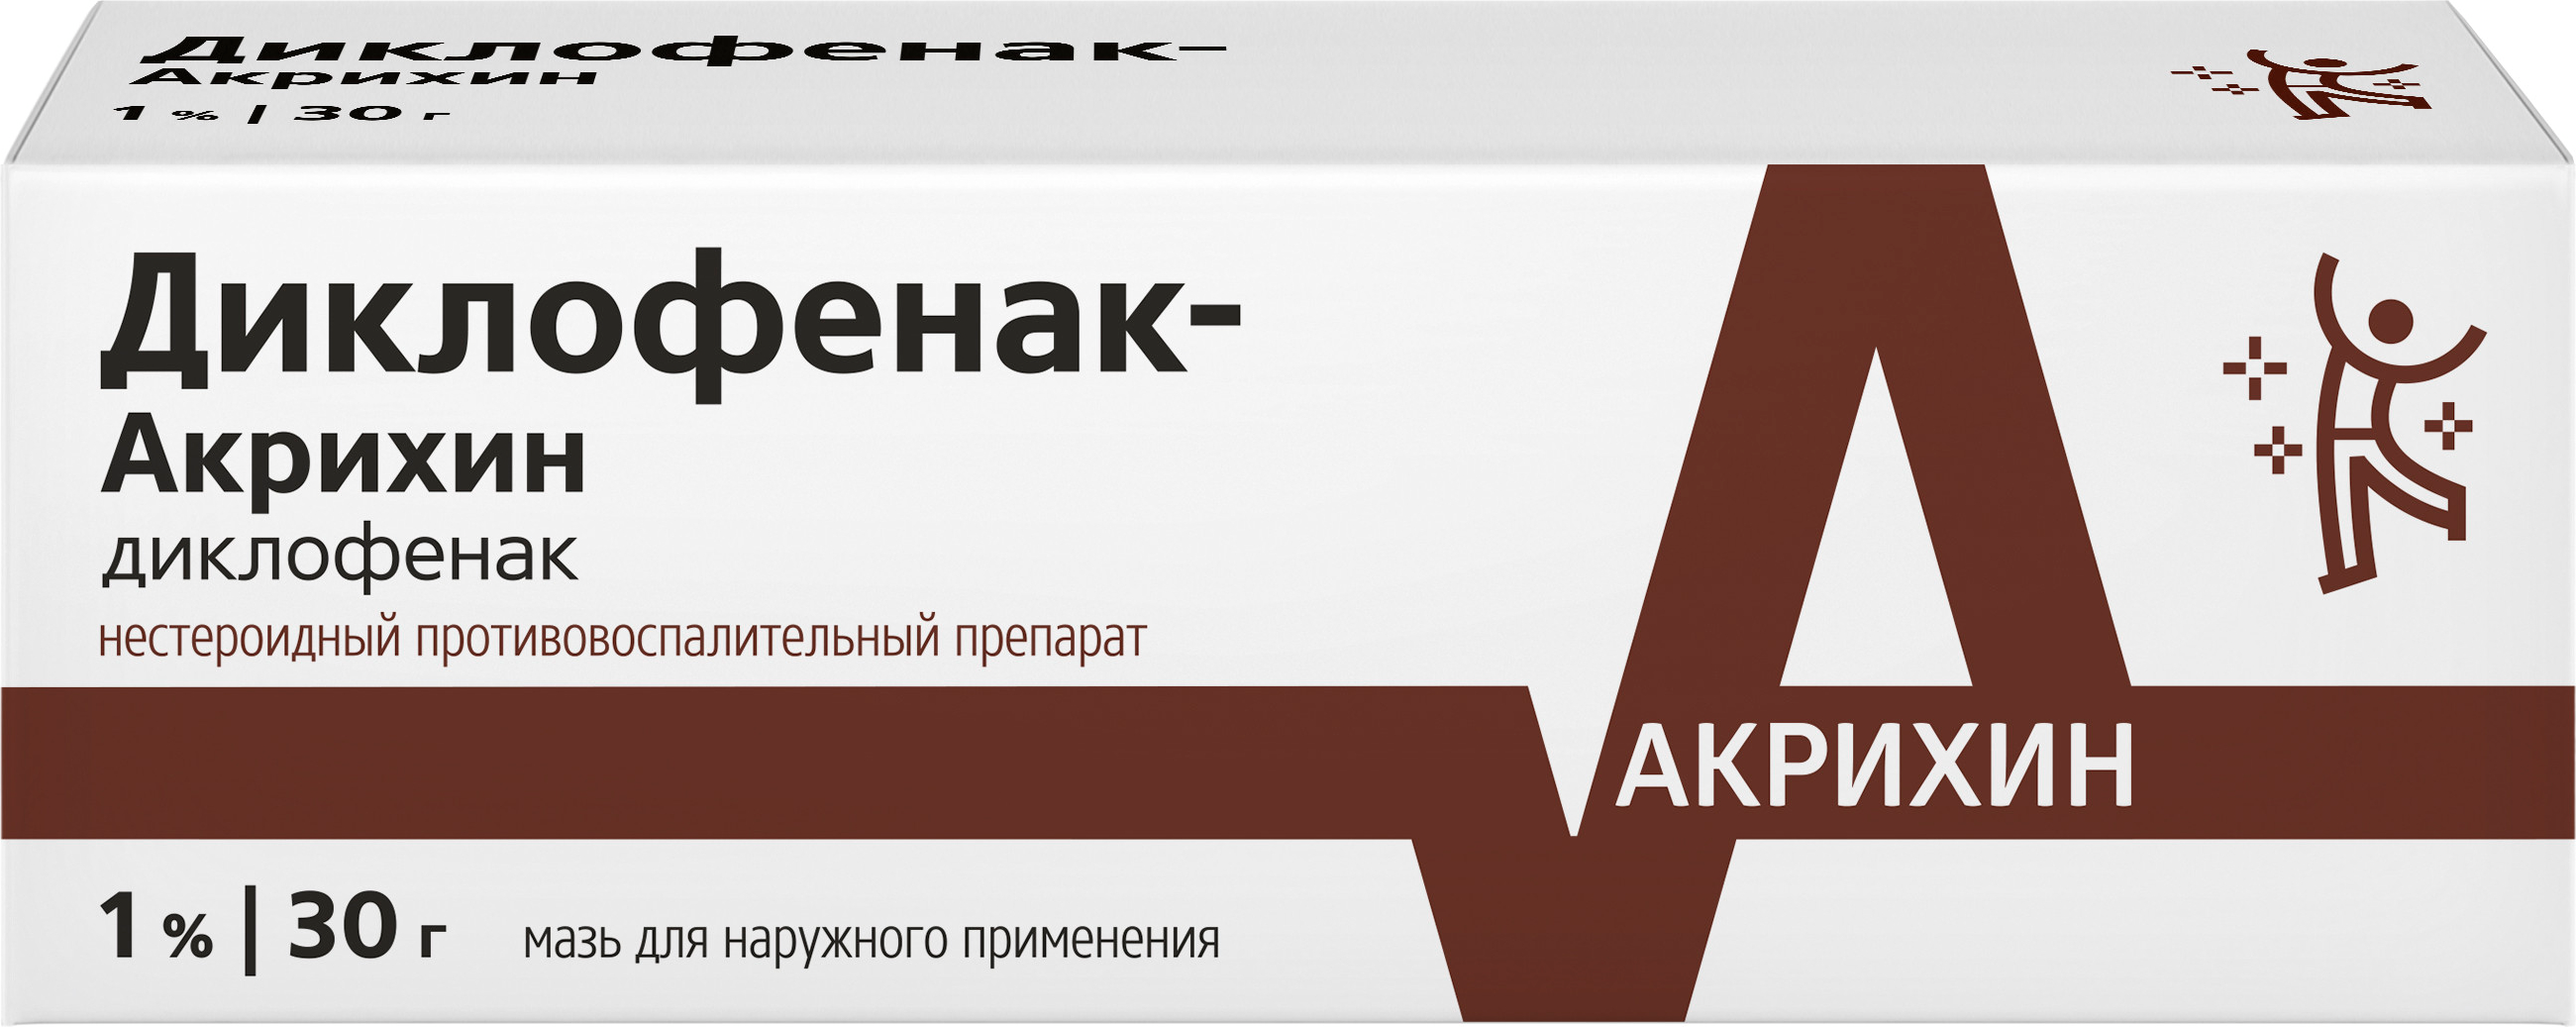 Диклофенак-Акрихин, мазь 1%, 30 г